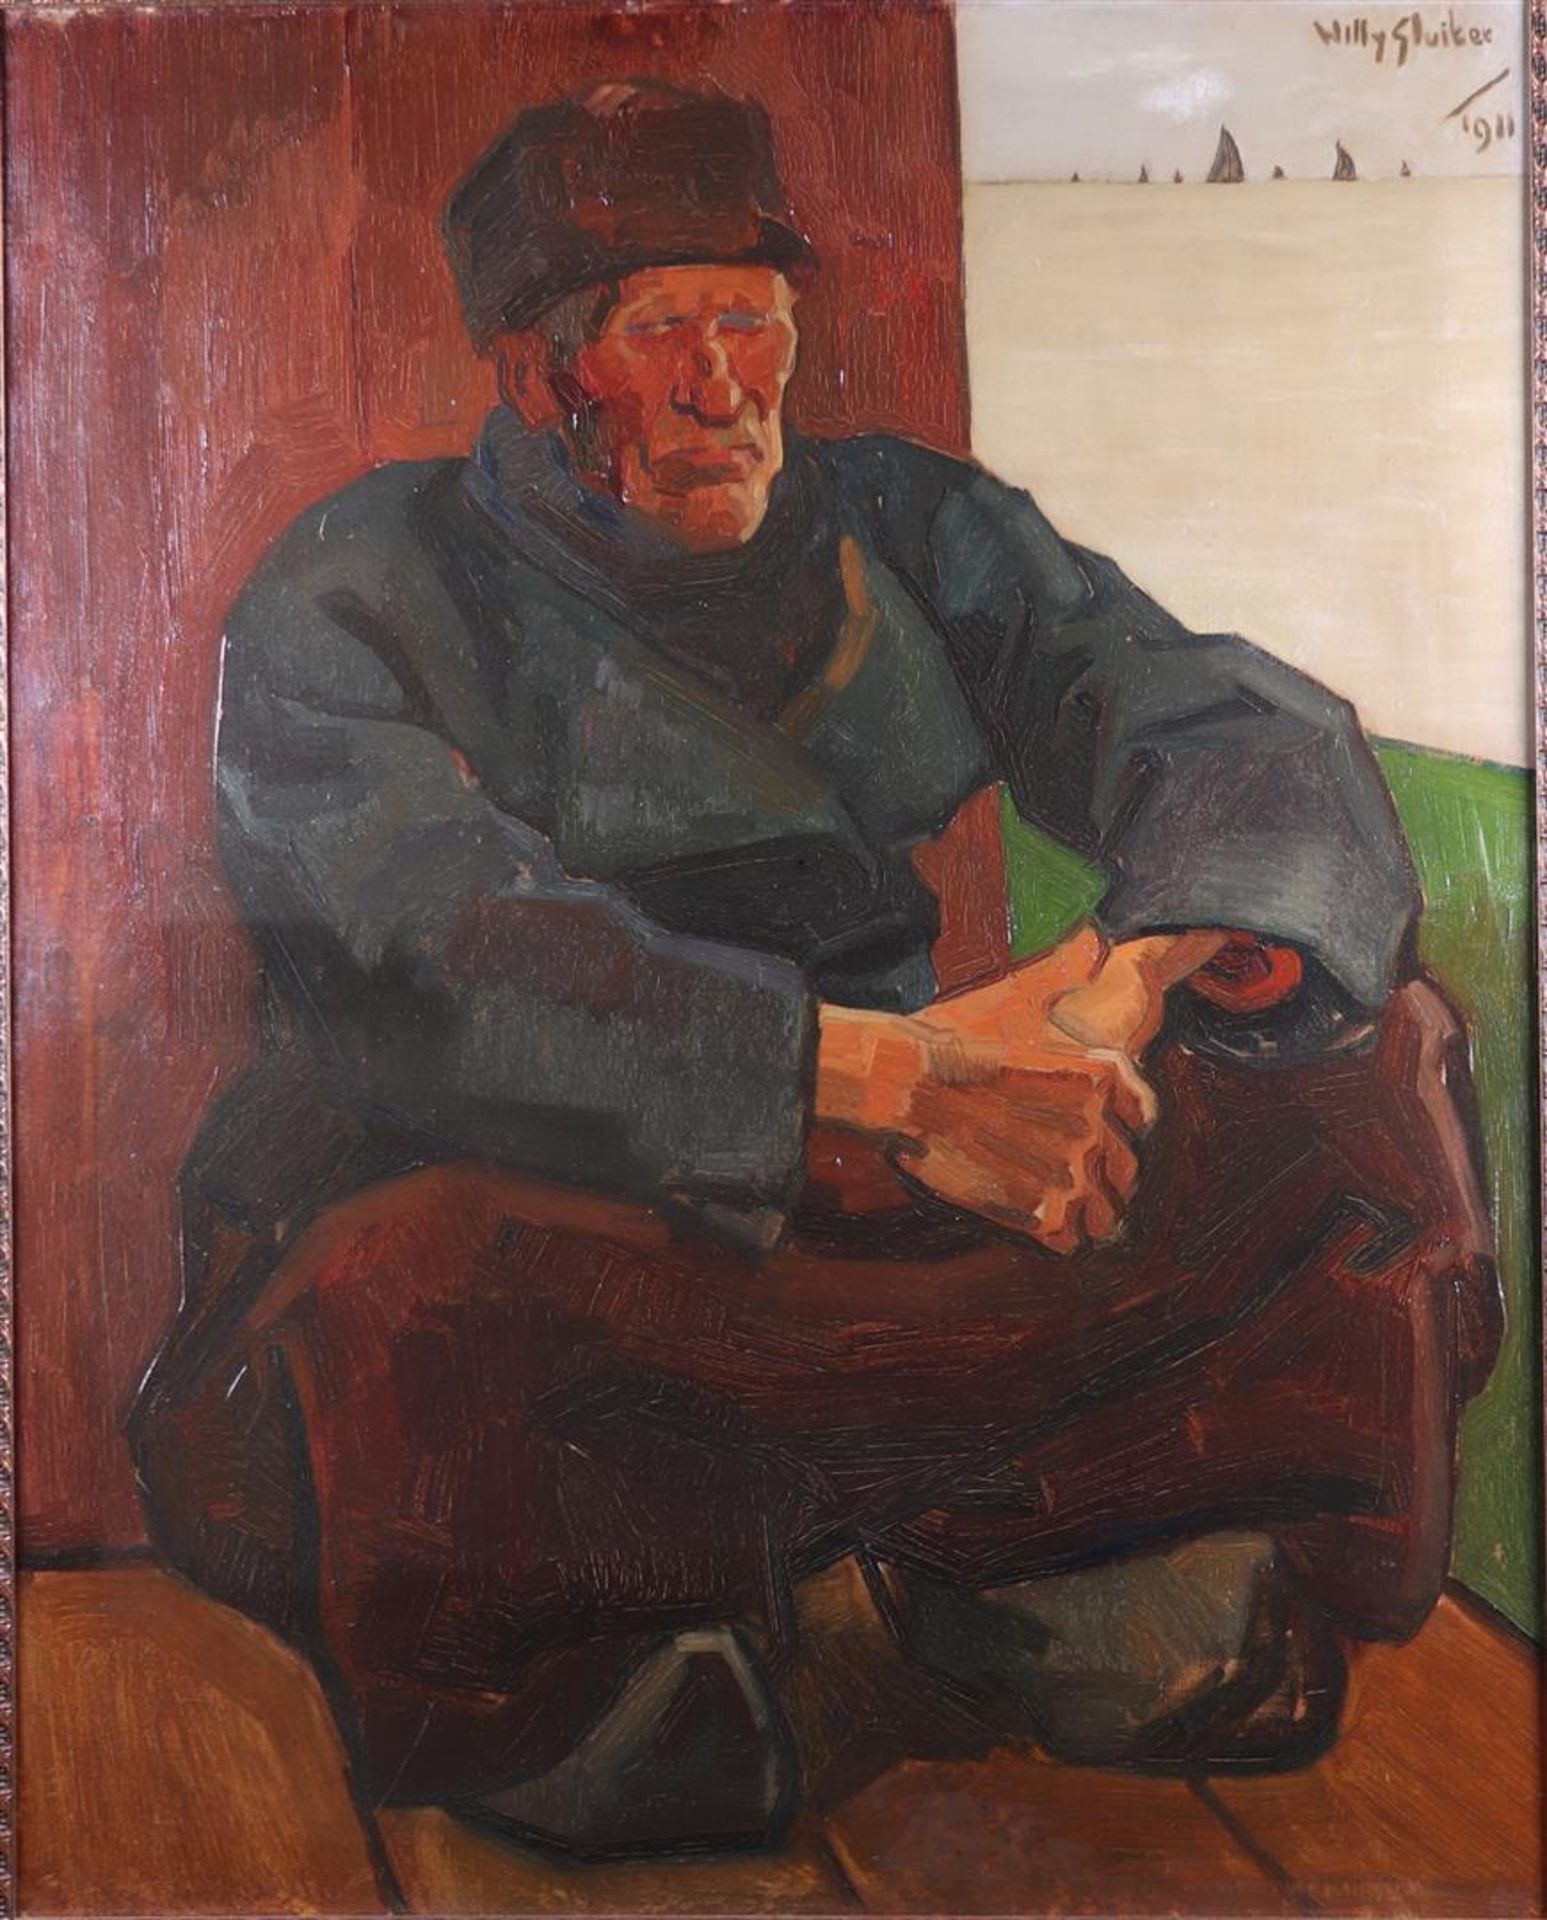 Willy Sluiter (Amersfoort 1873 - 1949 The Hague), Volendam fisherman squatting,